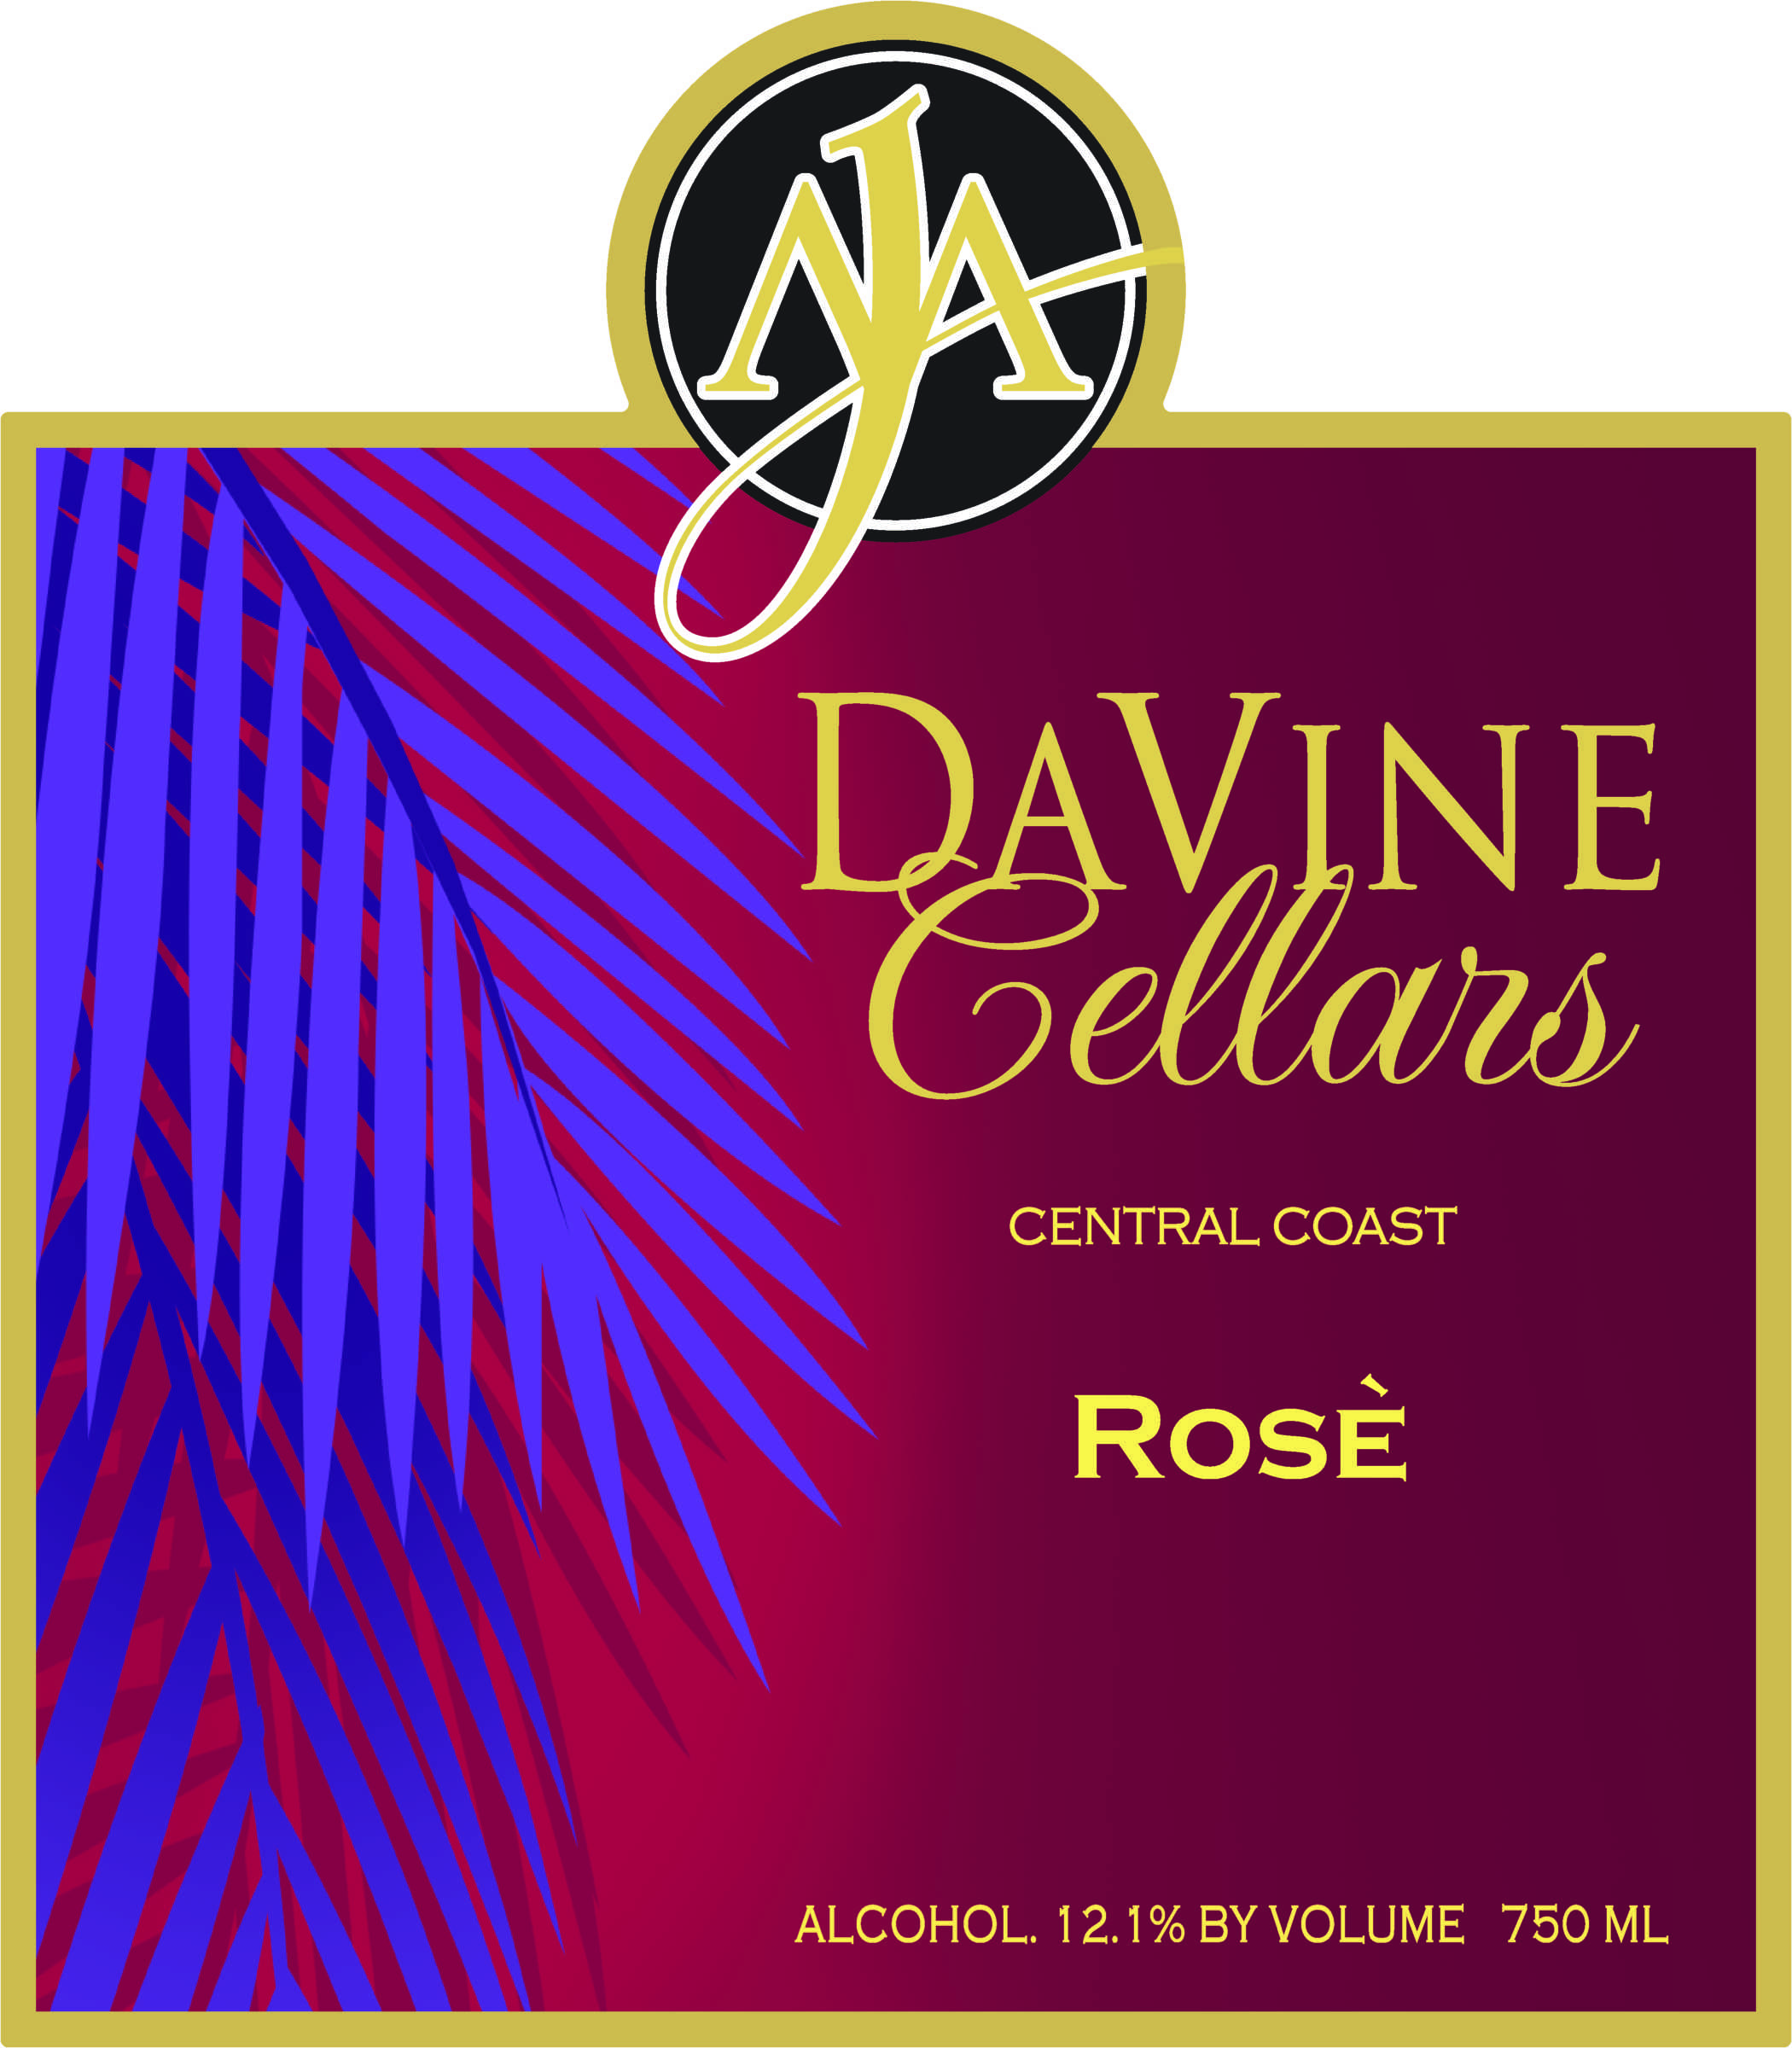 Product Image for NV Central Coast Rose "Tickled Pink"